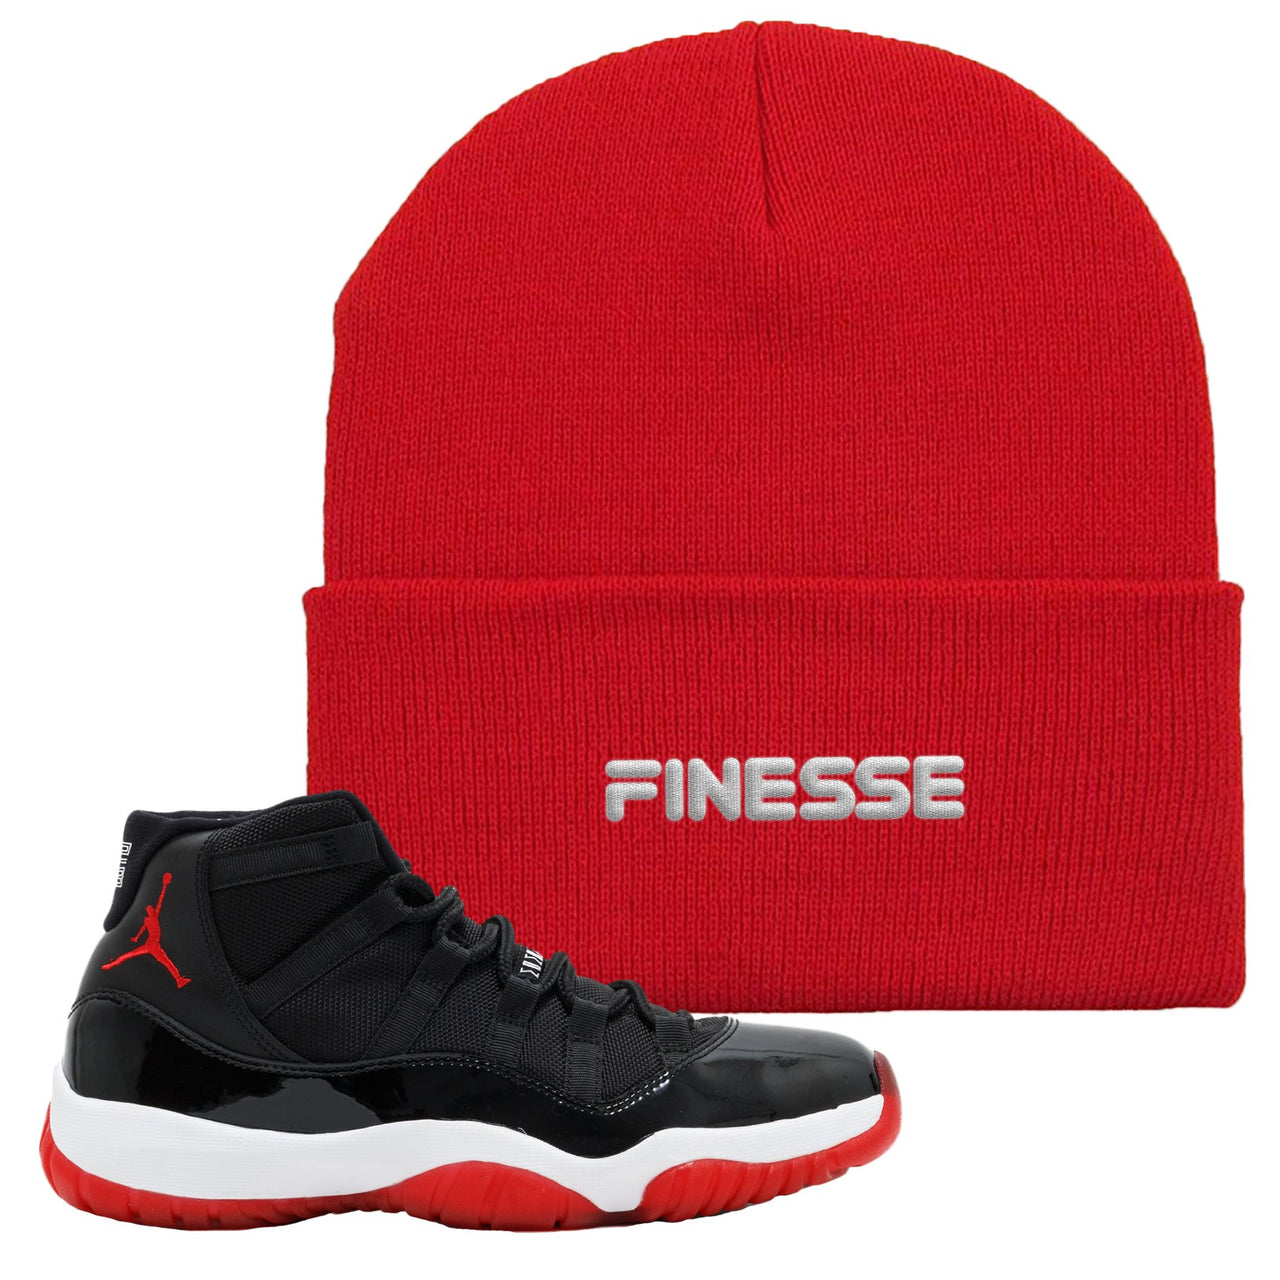 Jordan 11 Bred Finesse Red Sneaker Hook Up Beanie